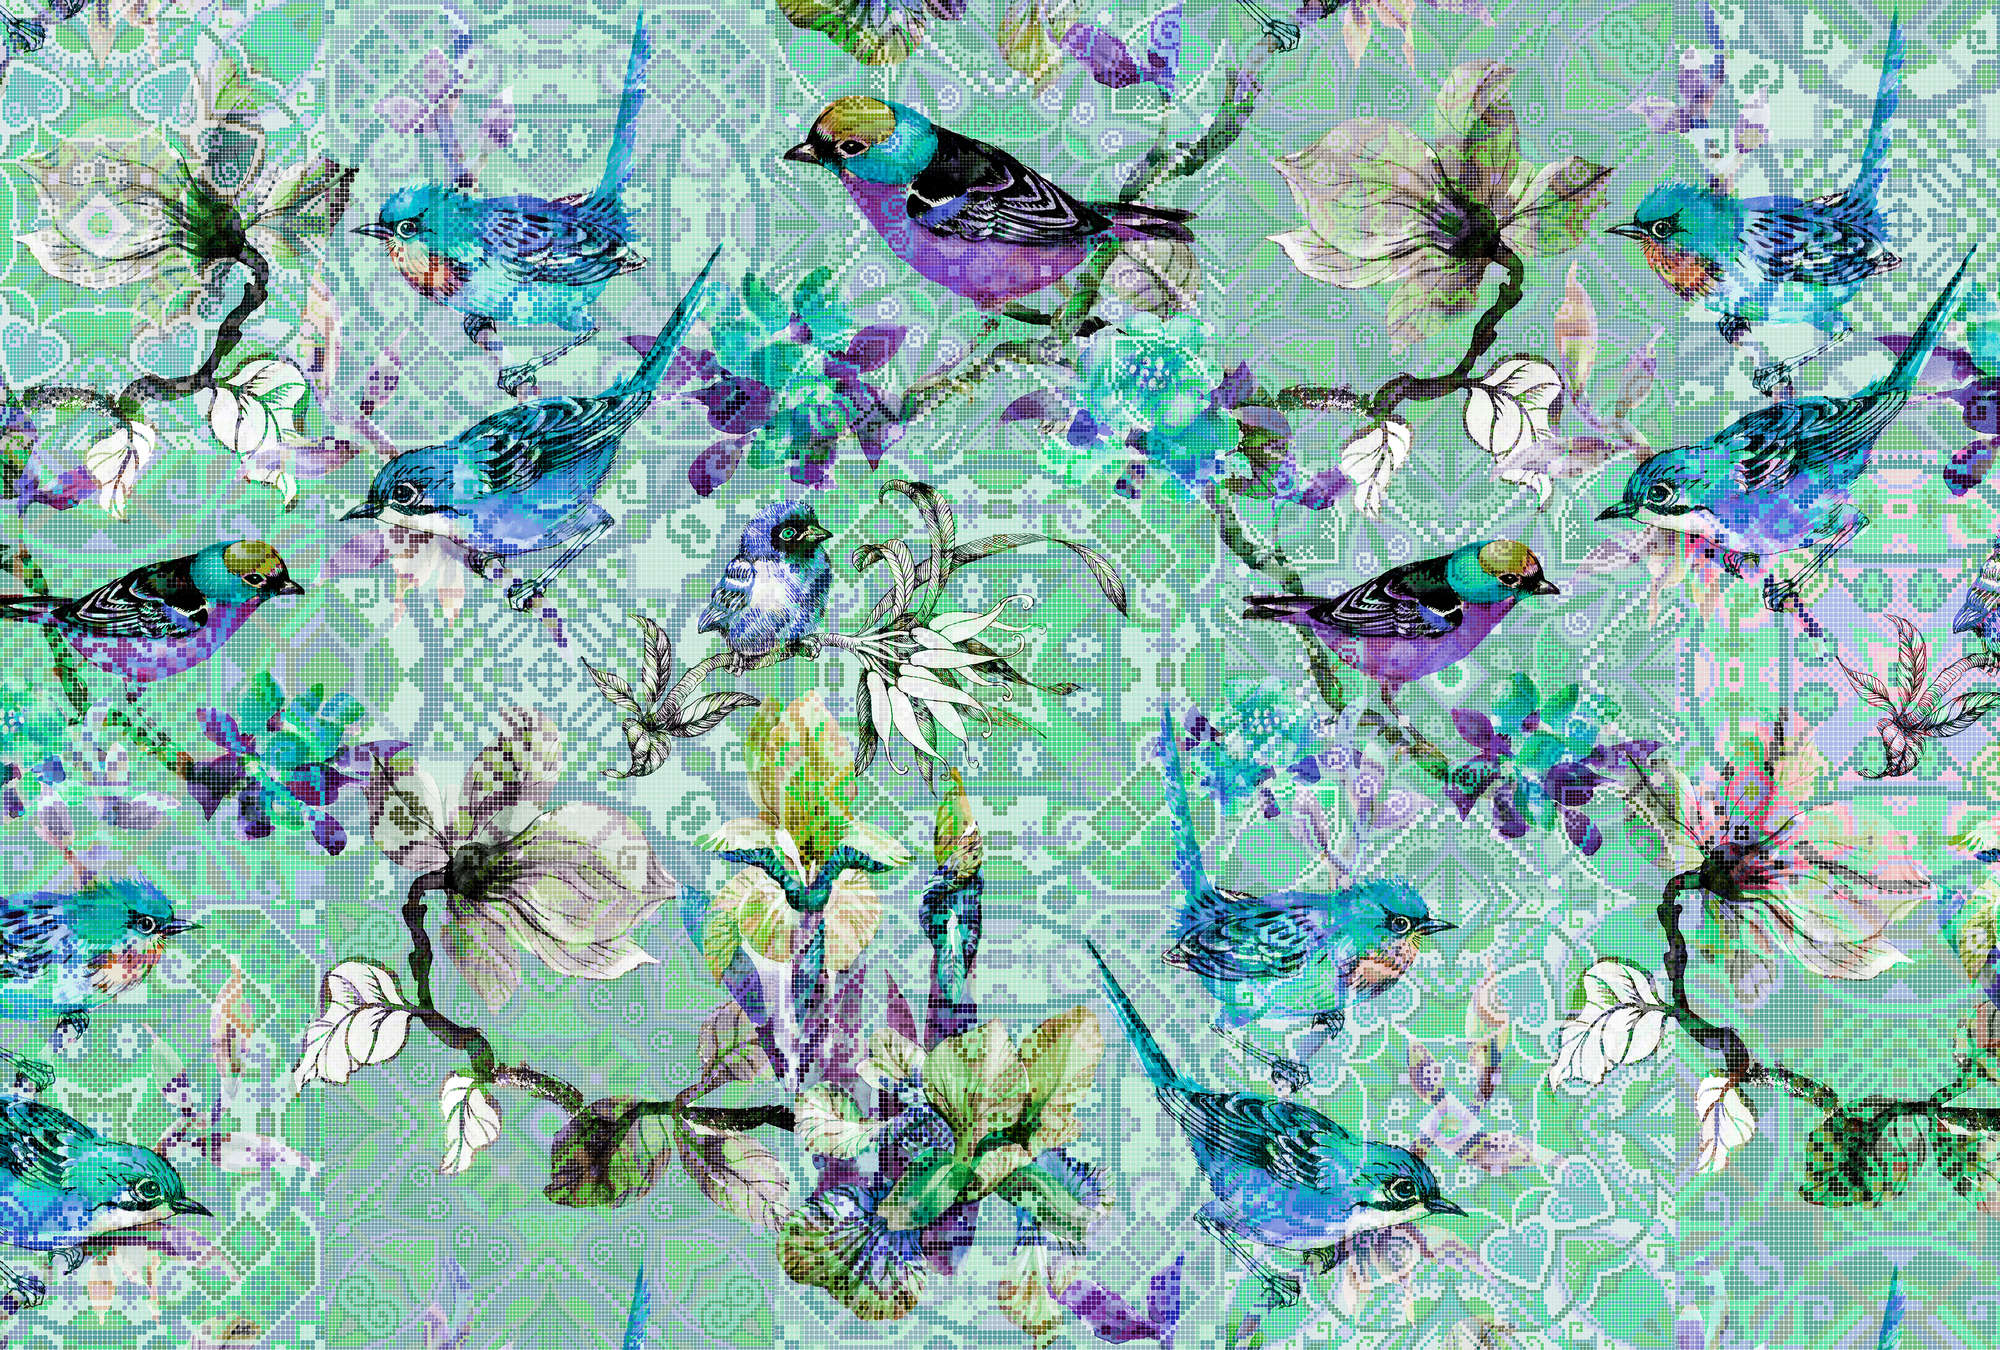             Vogel Fototapete mit Mosaik Muster – Walls by Patel
        